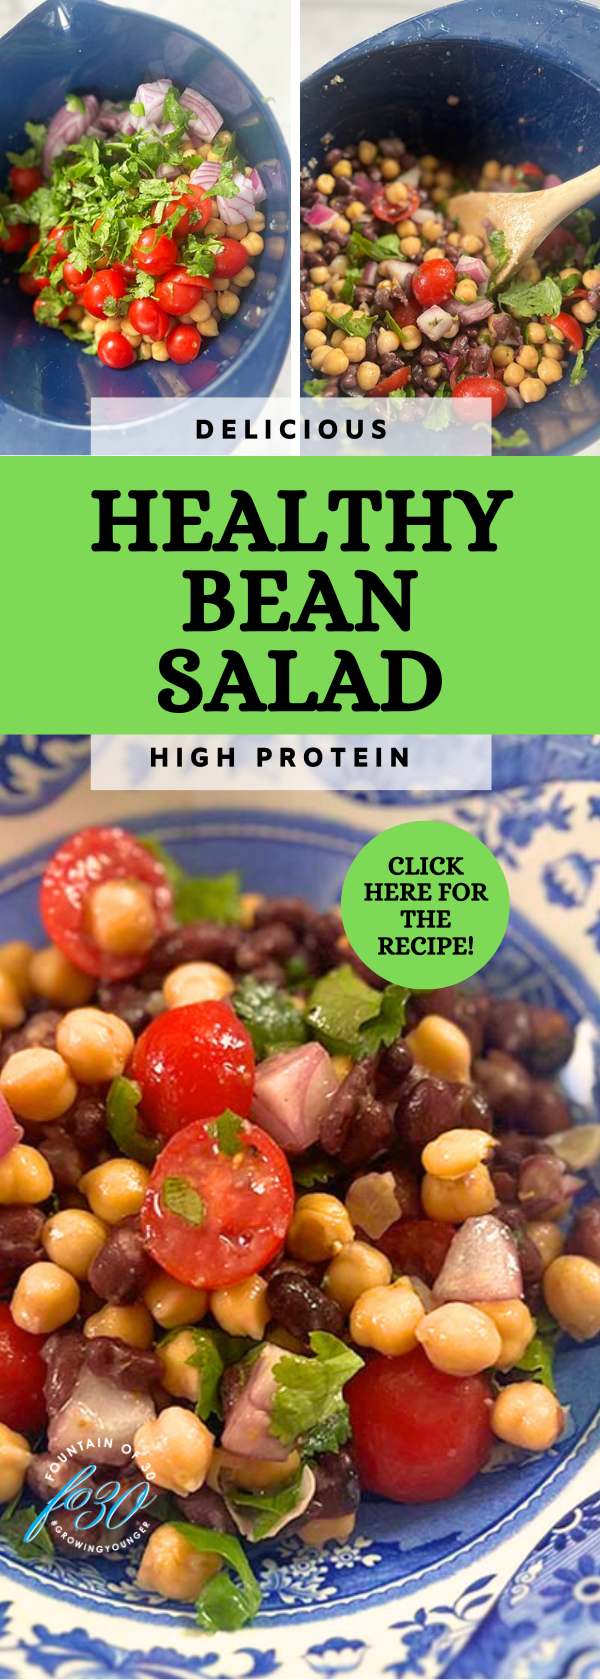 easy healthy bean salad recipe fountainof30